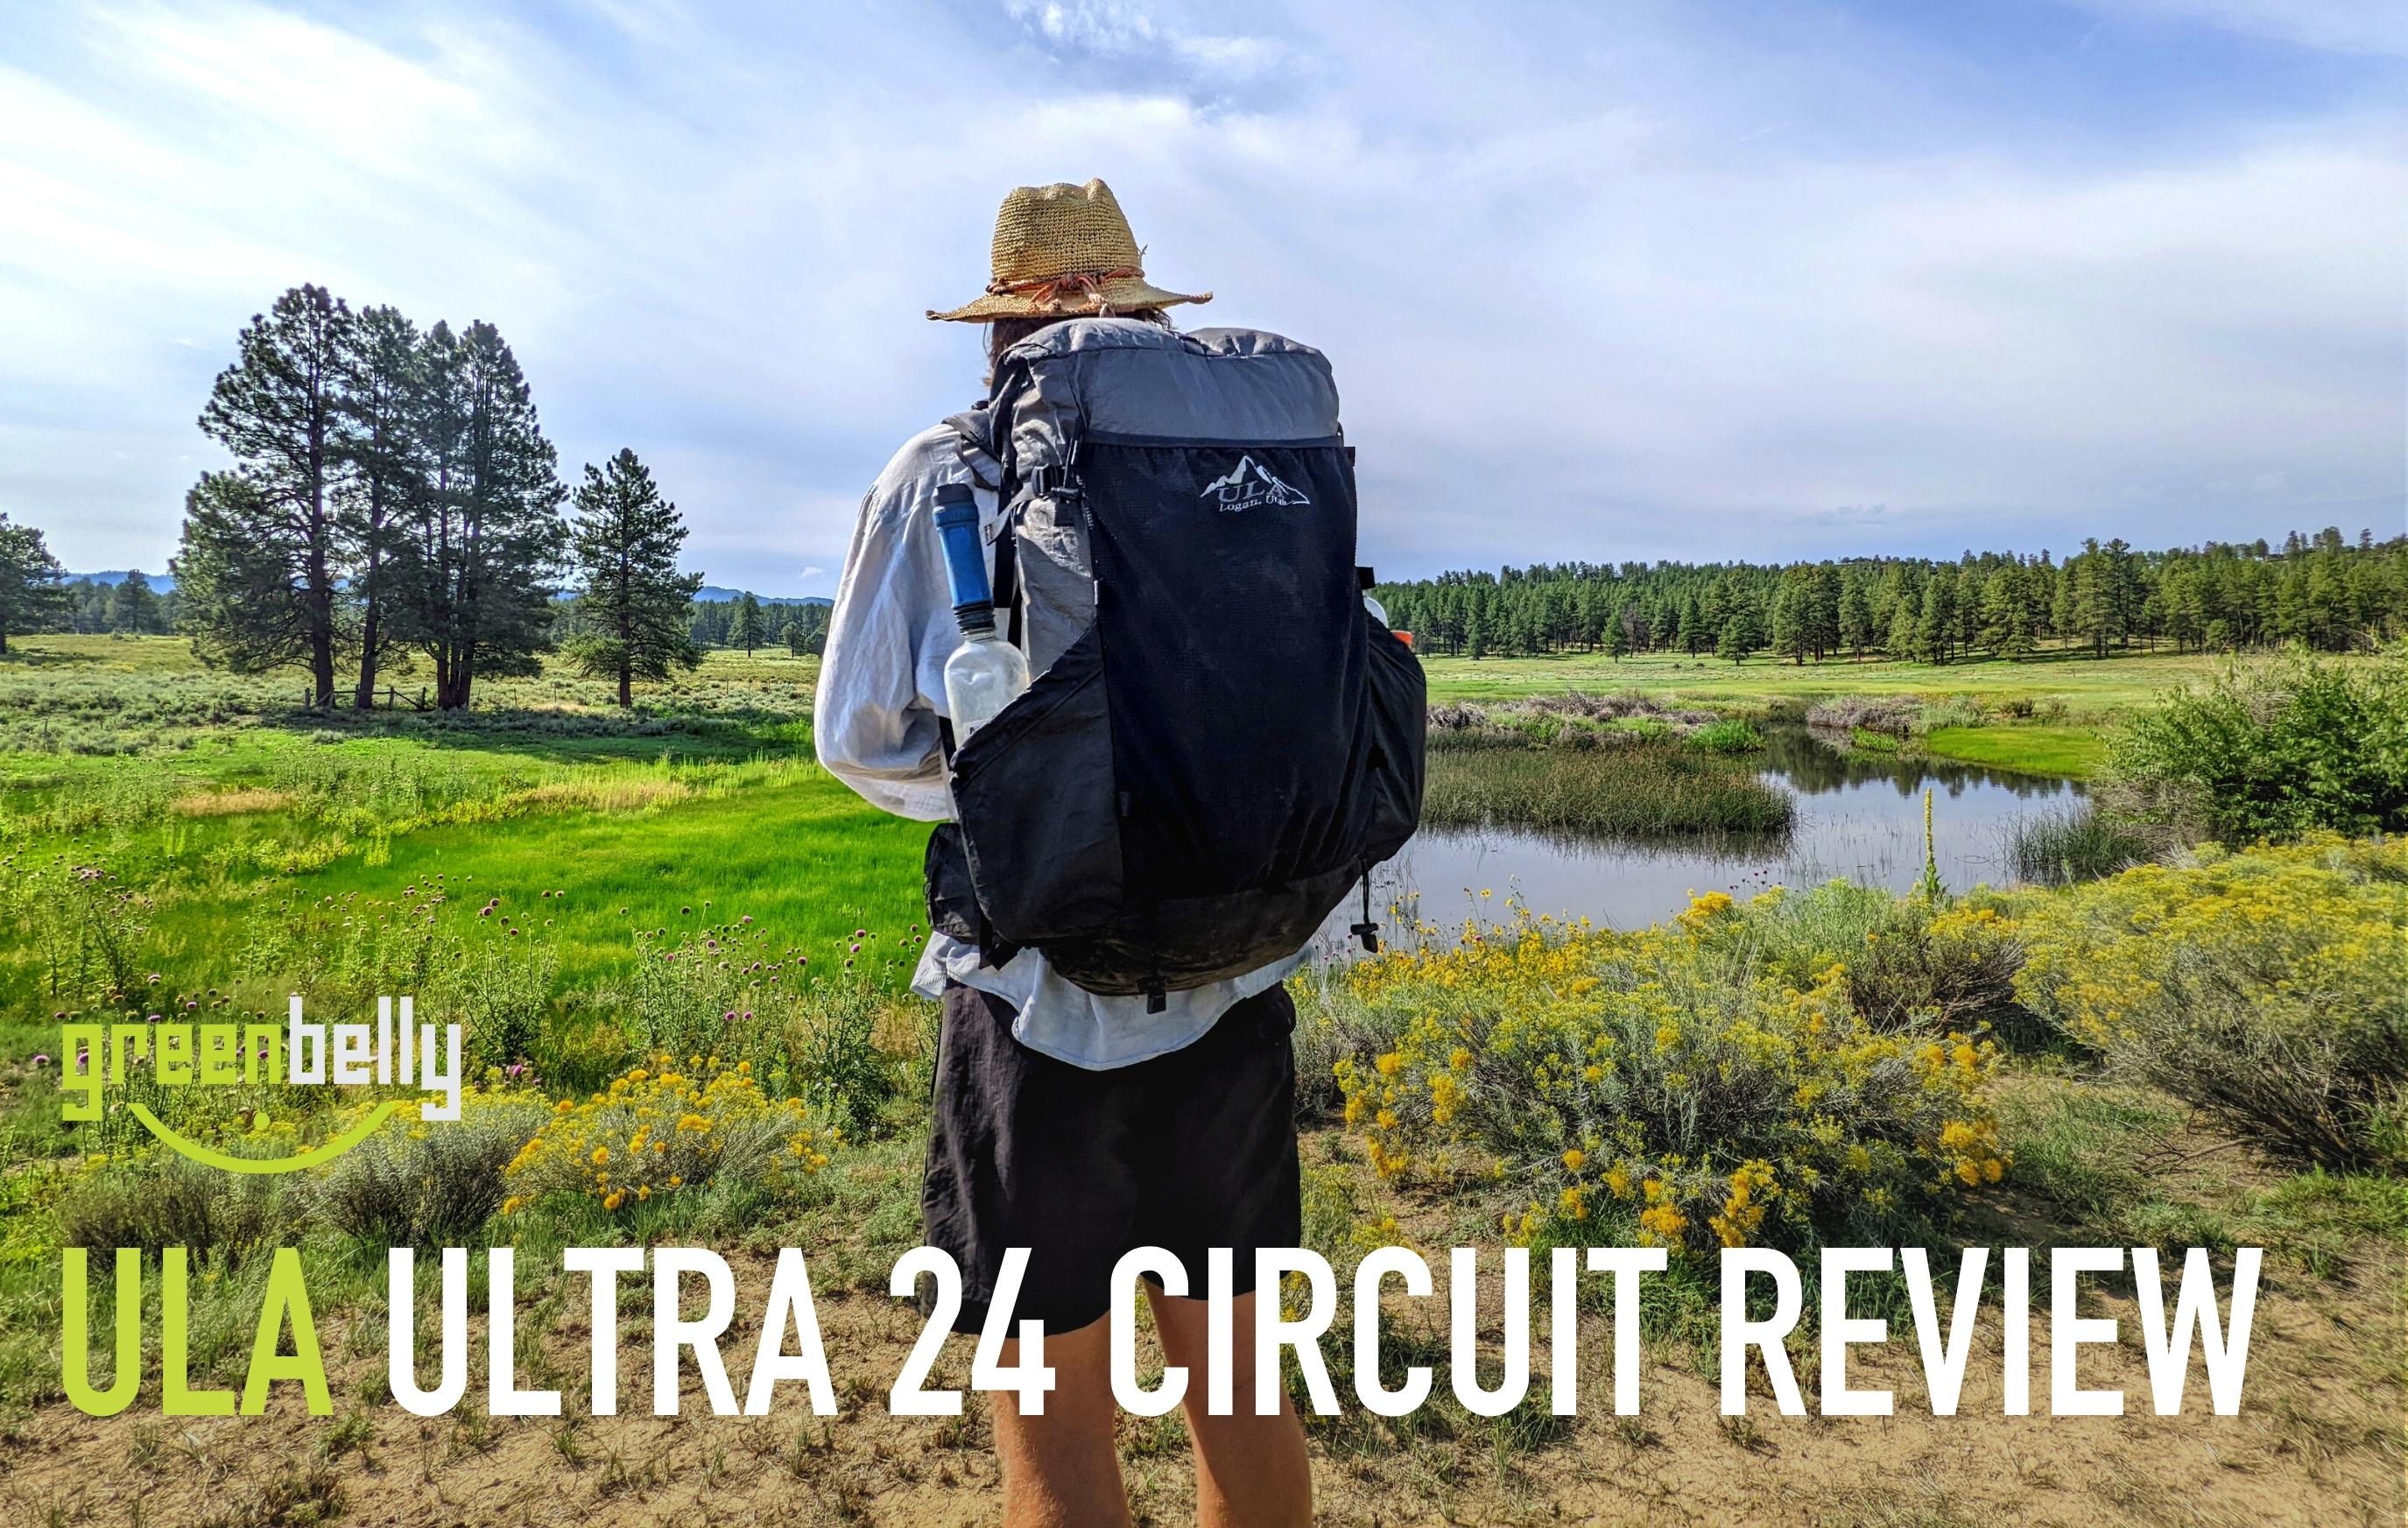 ULA Circuit Review – Thruhikers: Renee and Tim